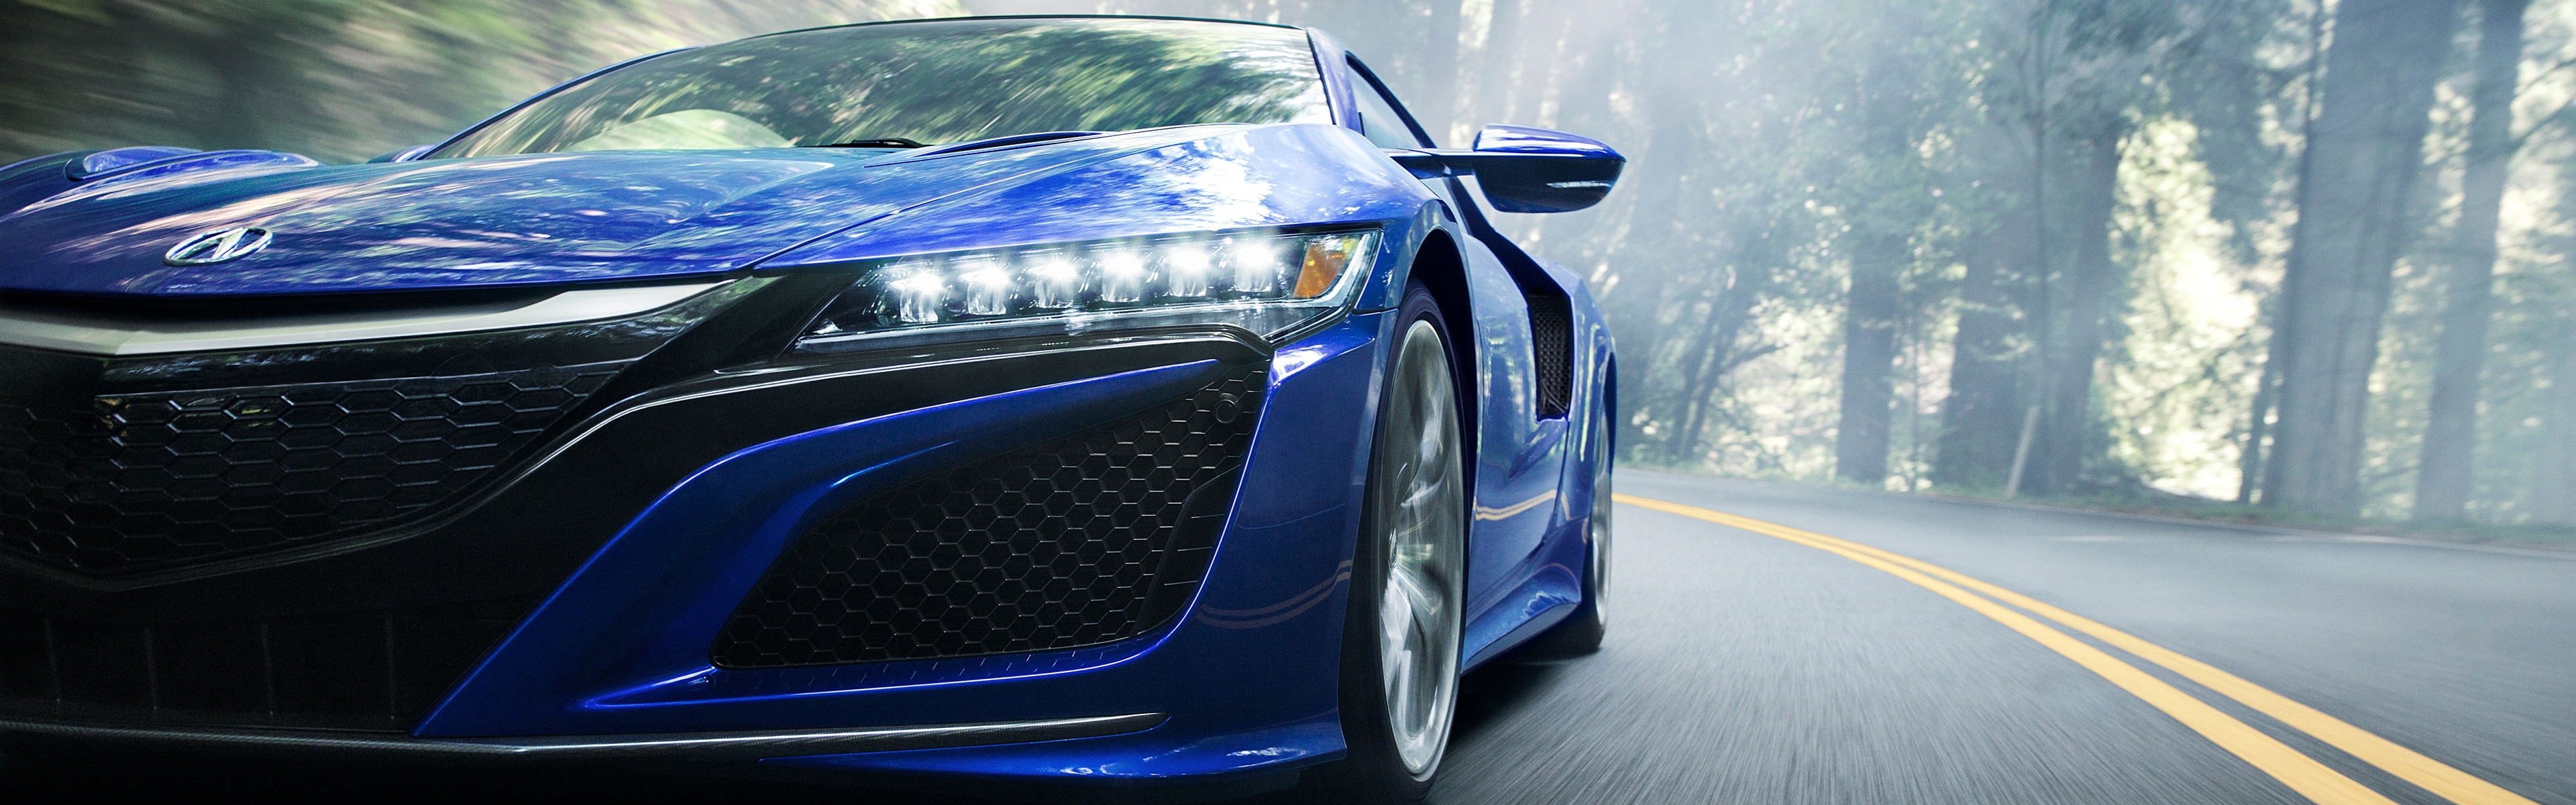 Acura NSX, Car, Vehicle, Mist, Road, Motion Blur, Dual Monitors, Multiple Display Wallpaper